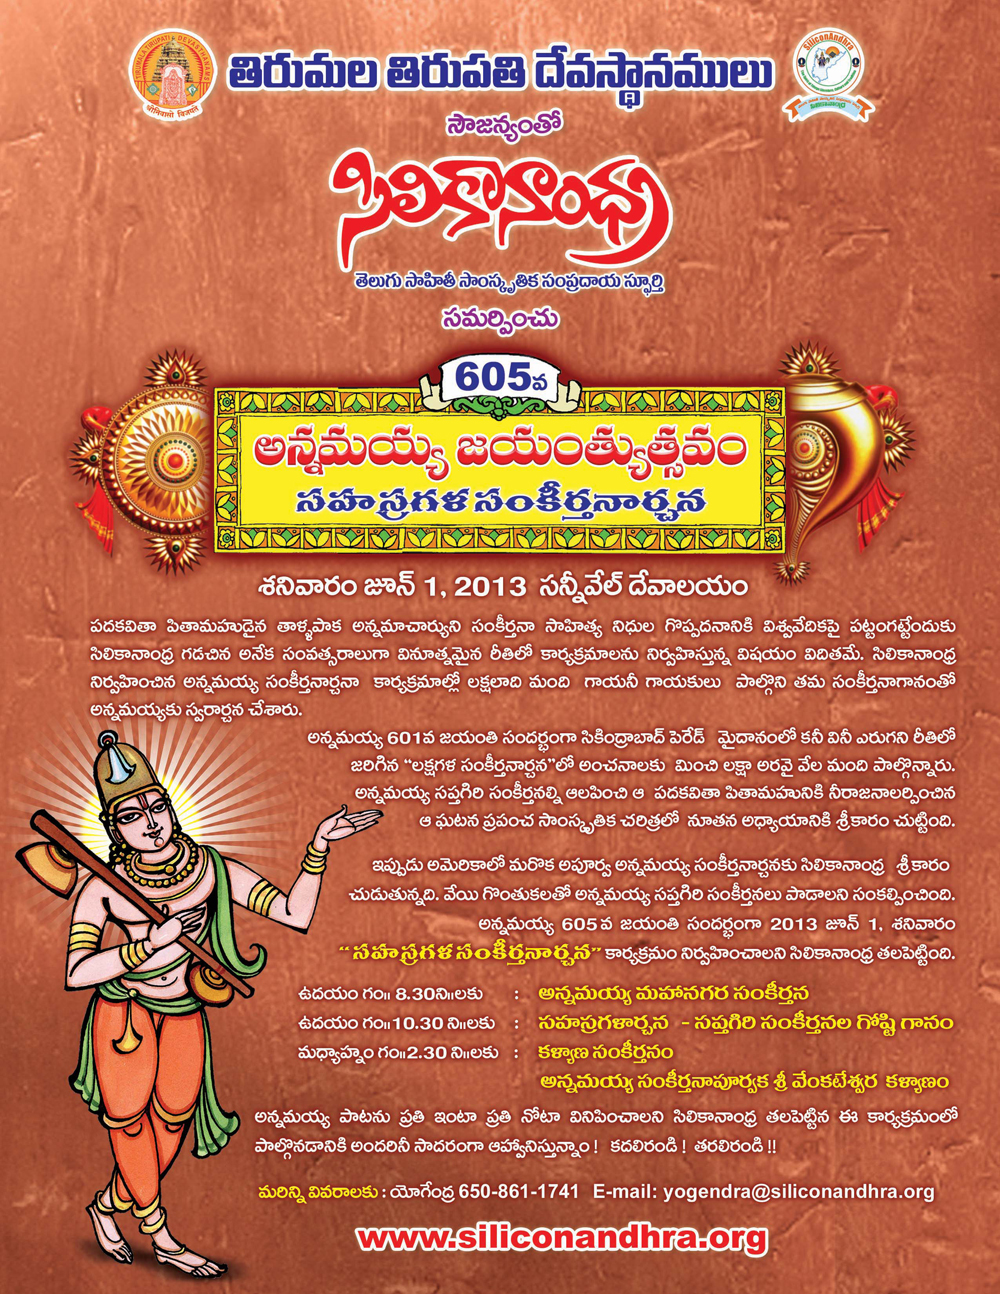 File:Details about Sun Dial at Annavaram in Telugu Language.jpg